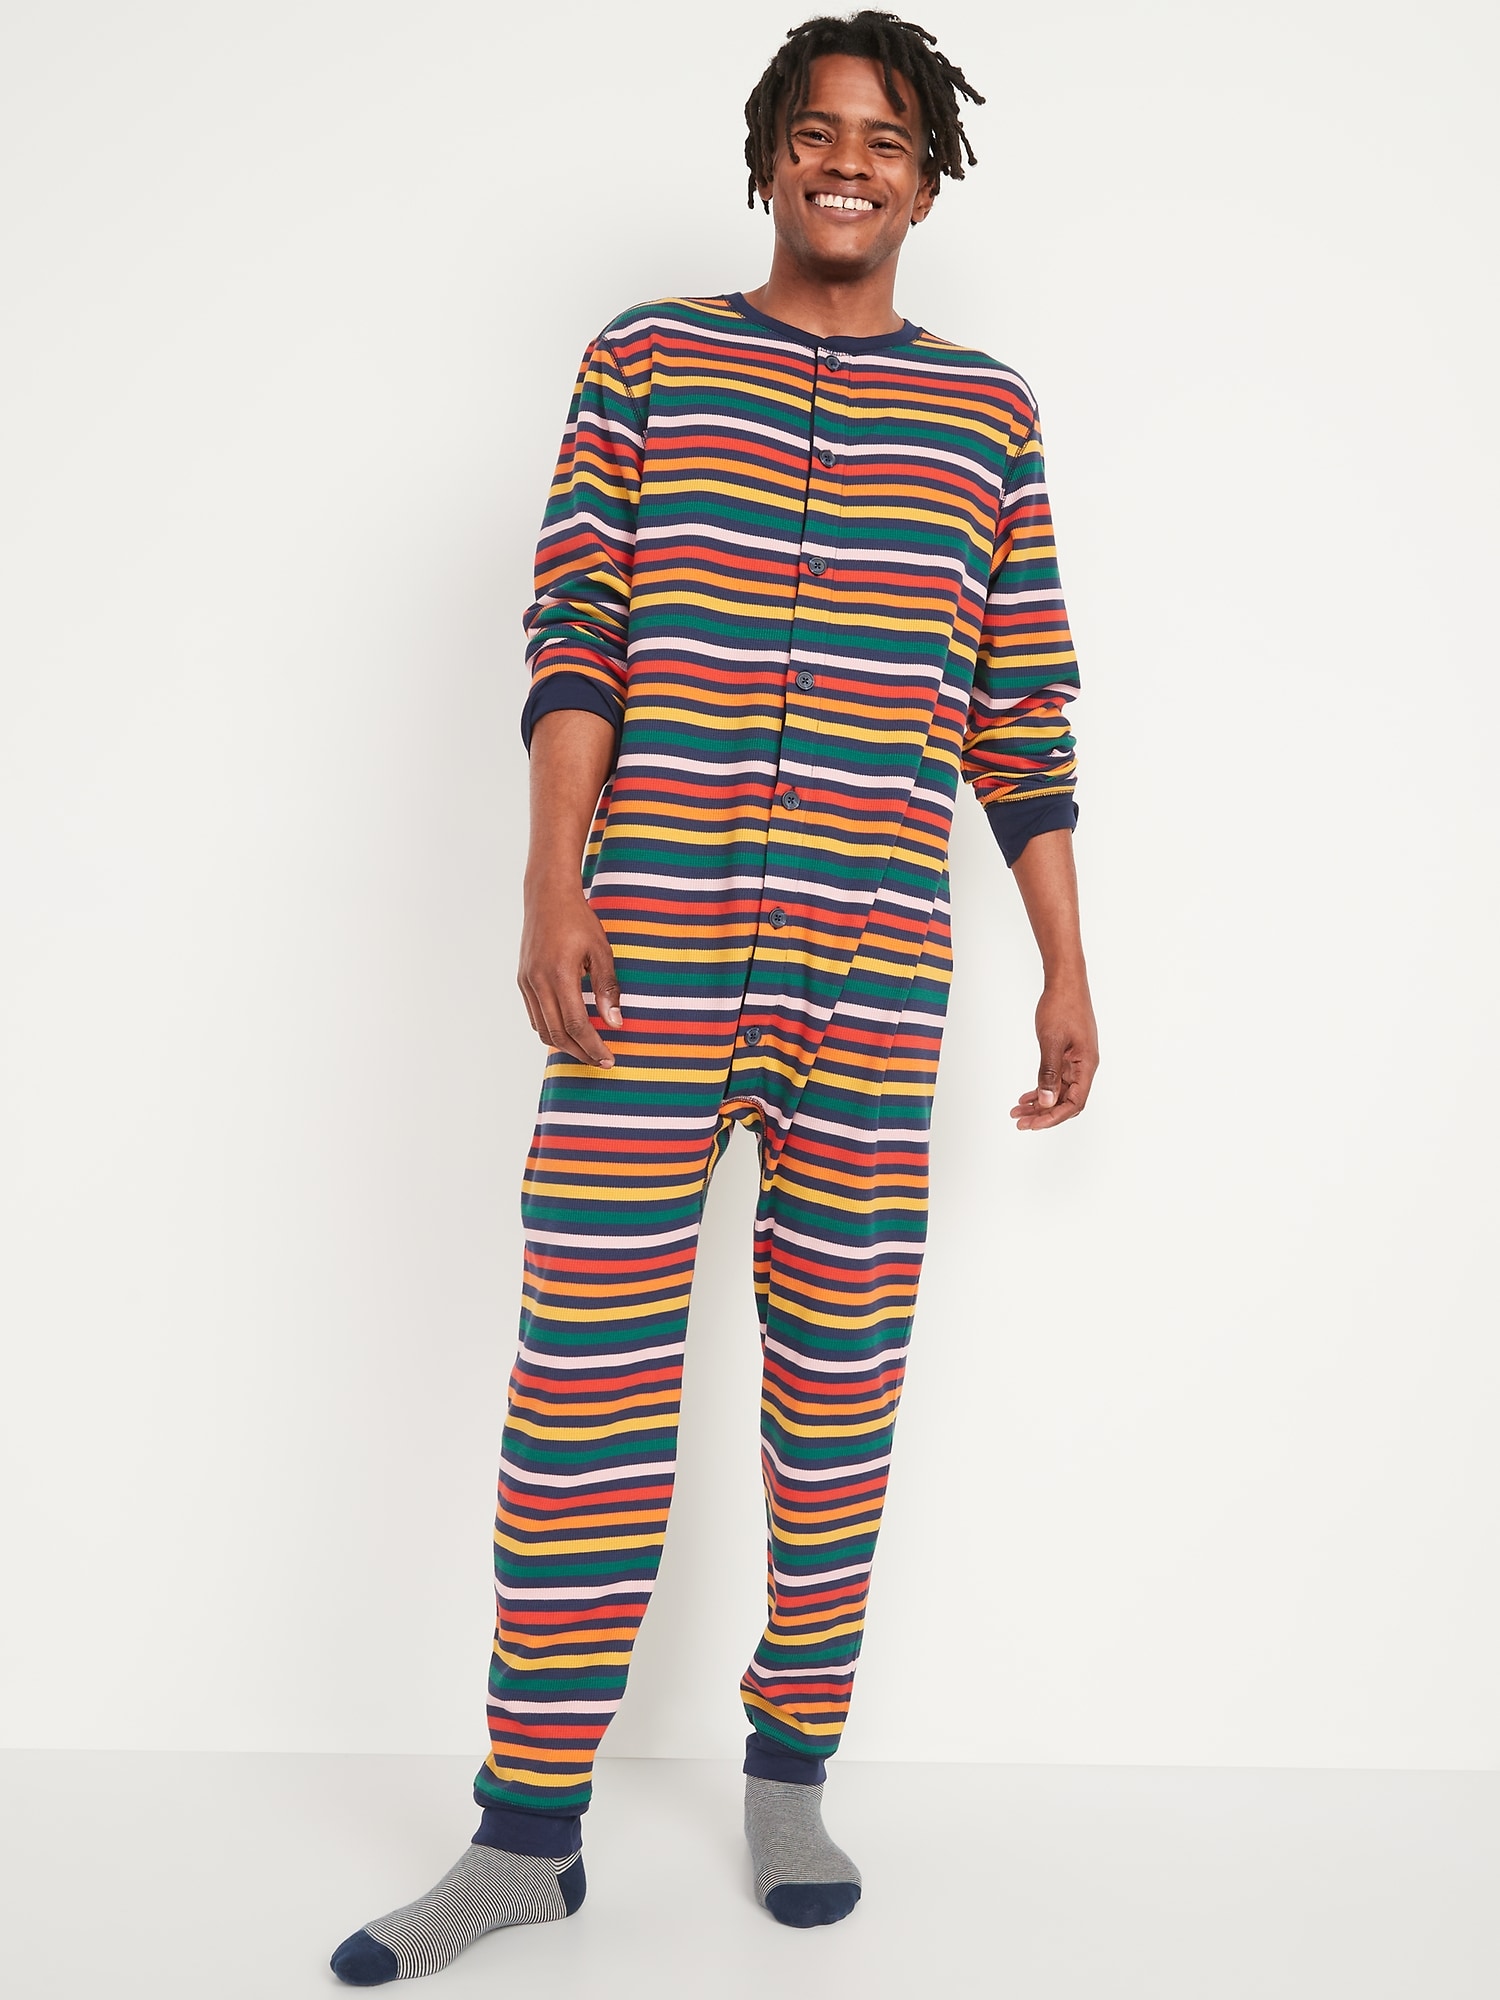 Matching Printed Thermal Pajama One-Piece